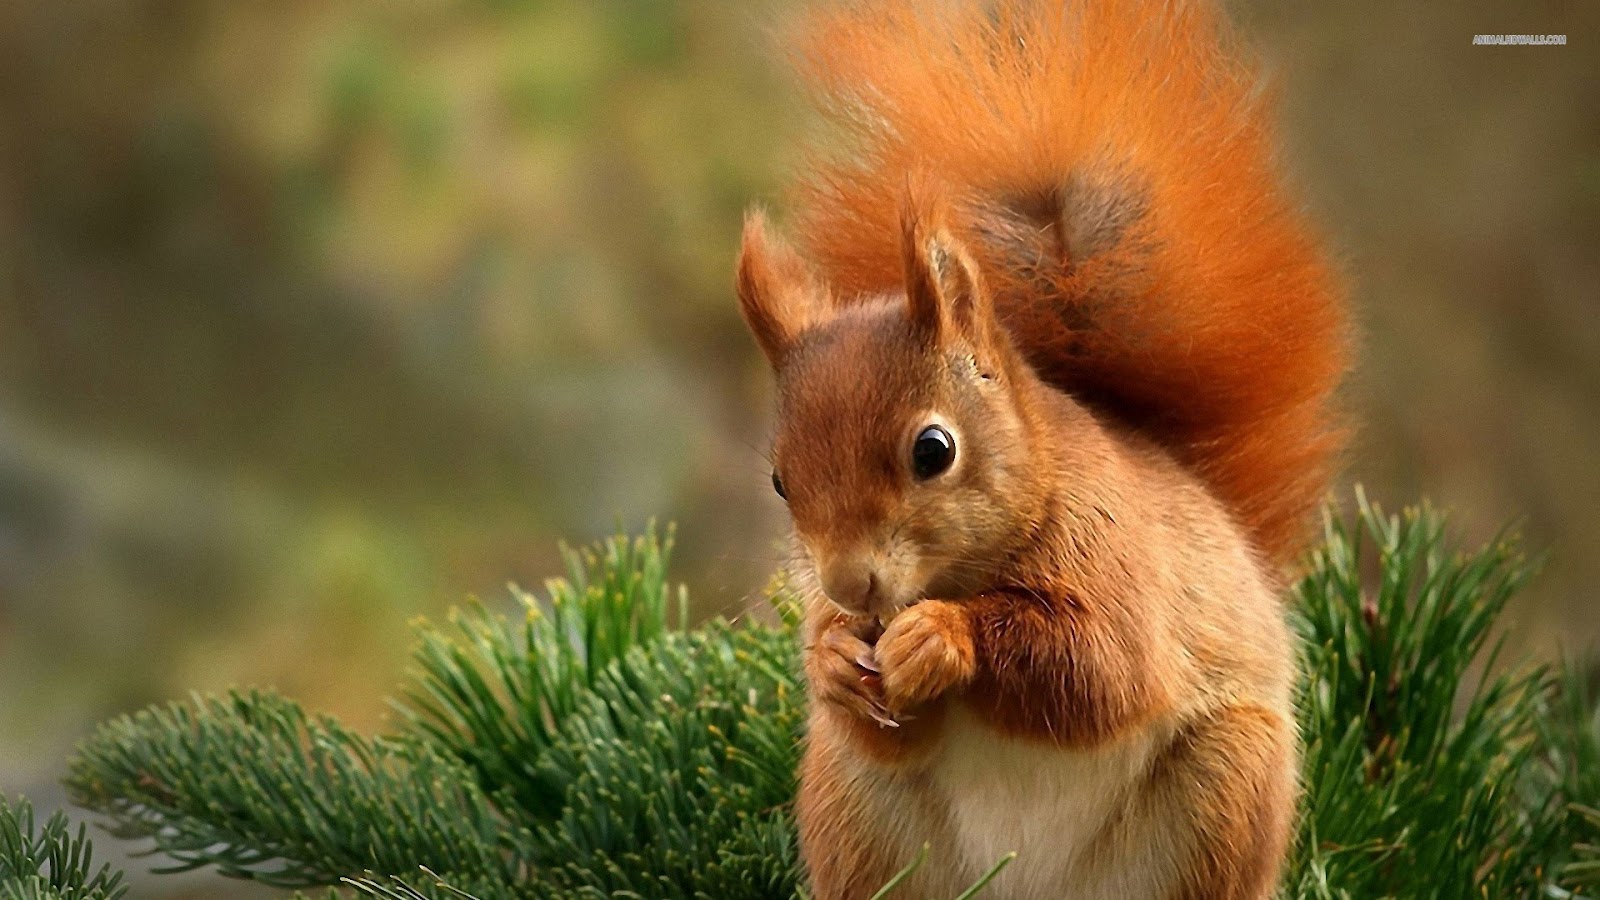 Funny Squirrels wallpaper for desktop |Funny Animal